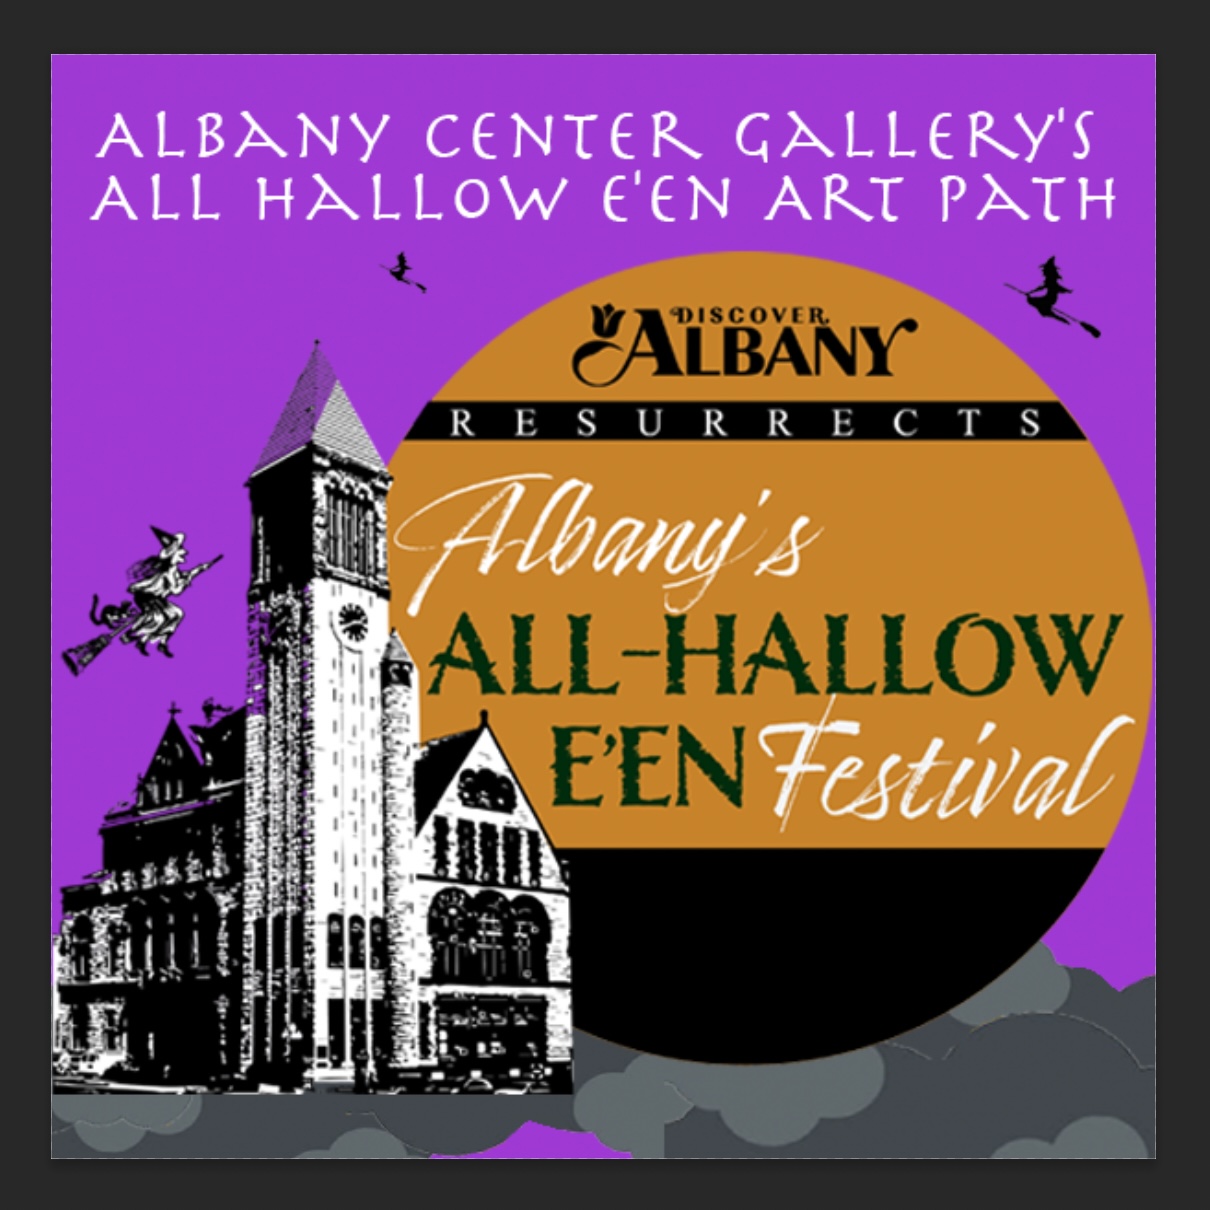 halloween festival art path